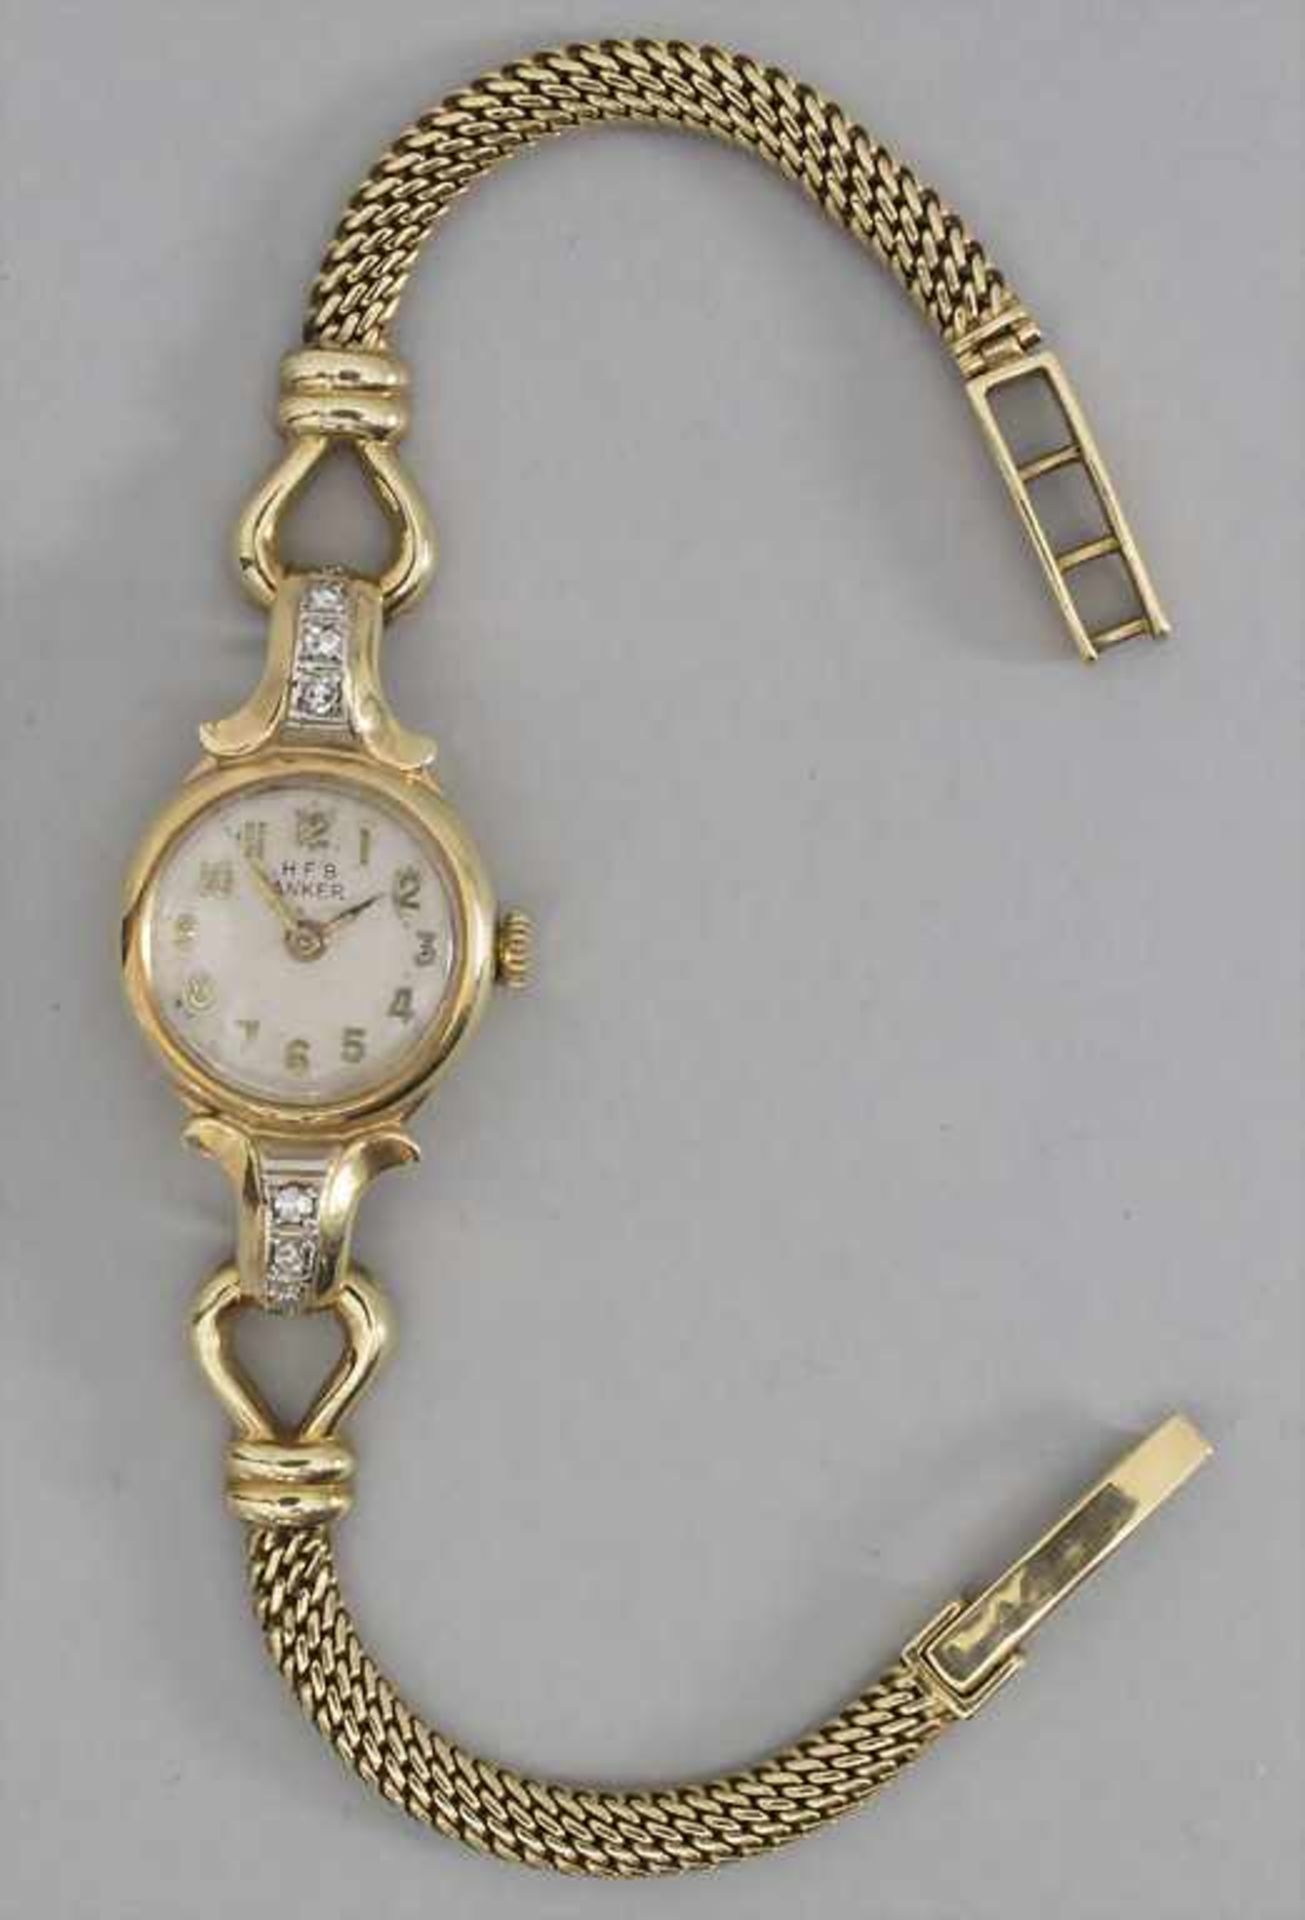 Damenarmbanduhr in Gold / A ladies watch in gold, H.F.B, um 1960 - Image 4 of 5